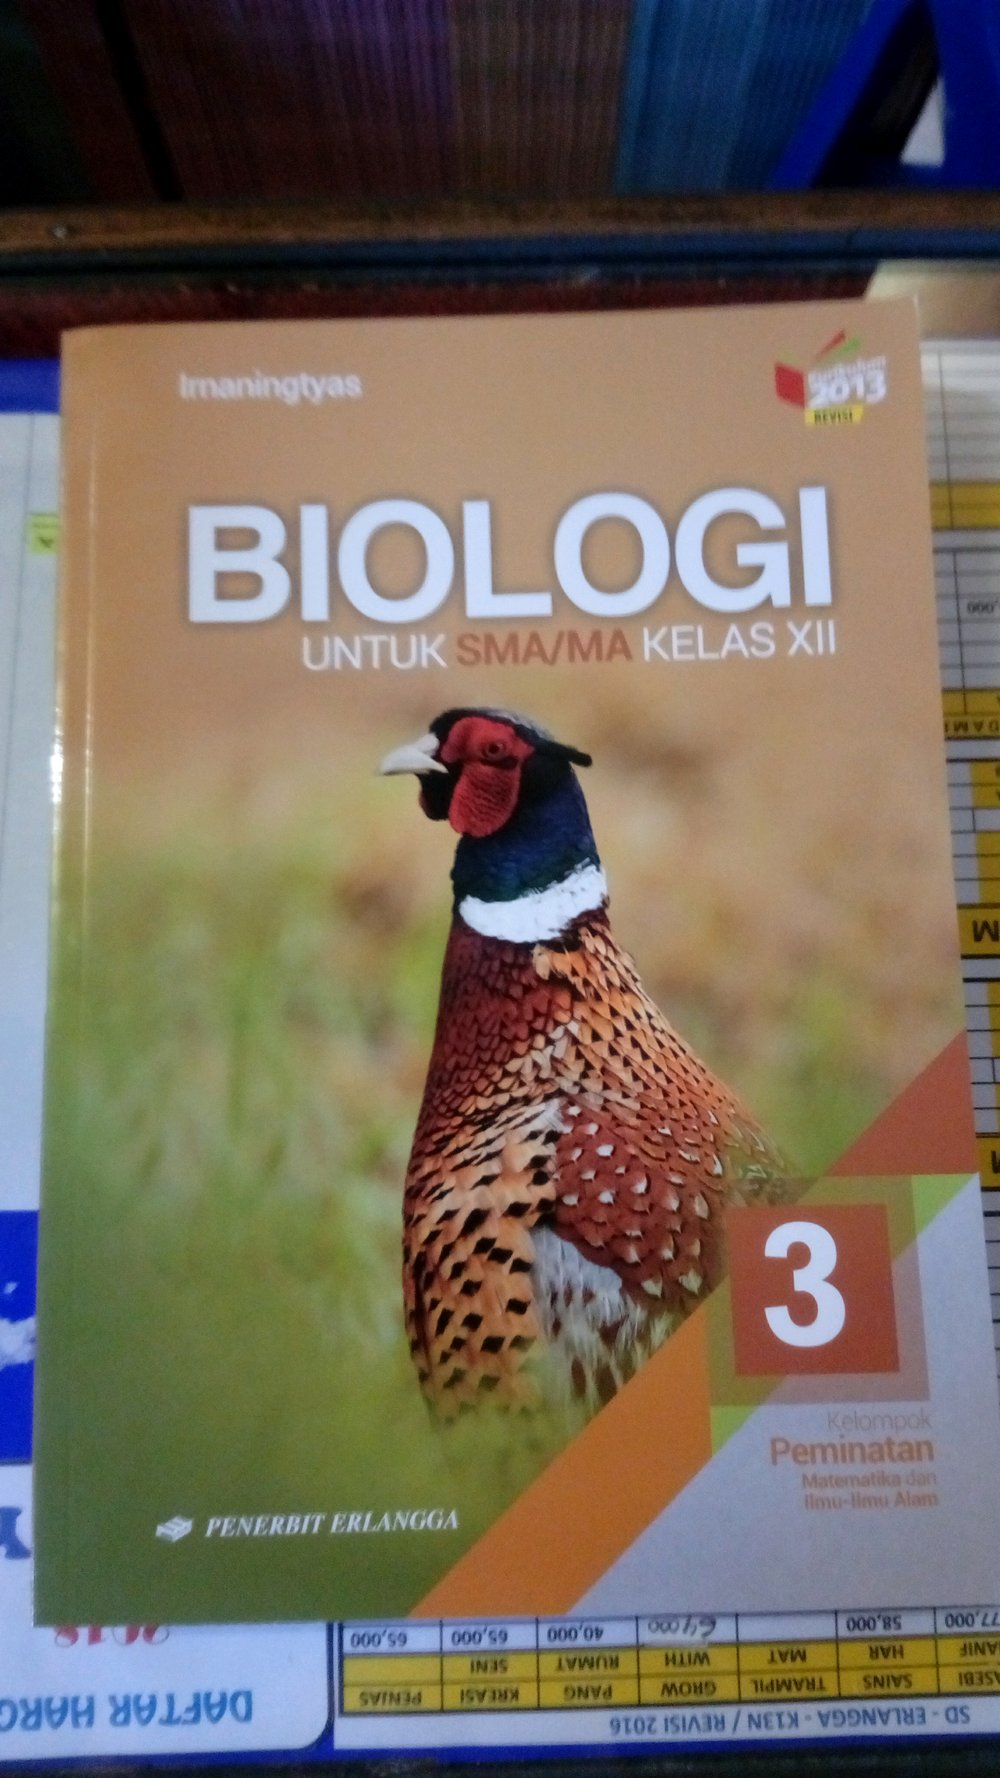 Download free buku biologi kelas xi erlangga pdf file - passionfer